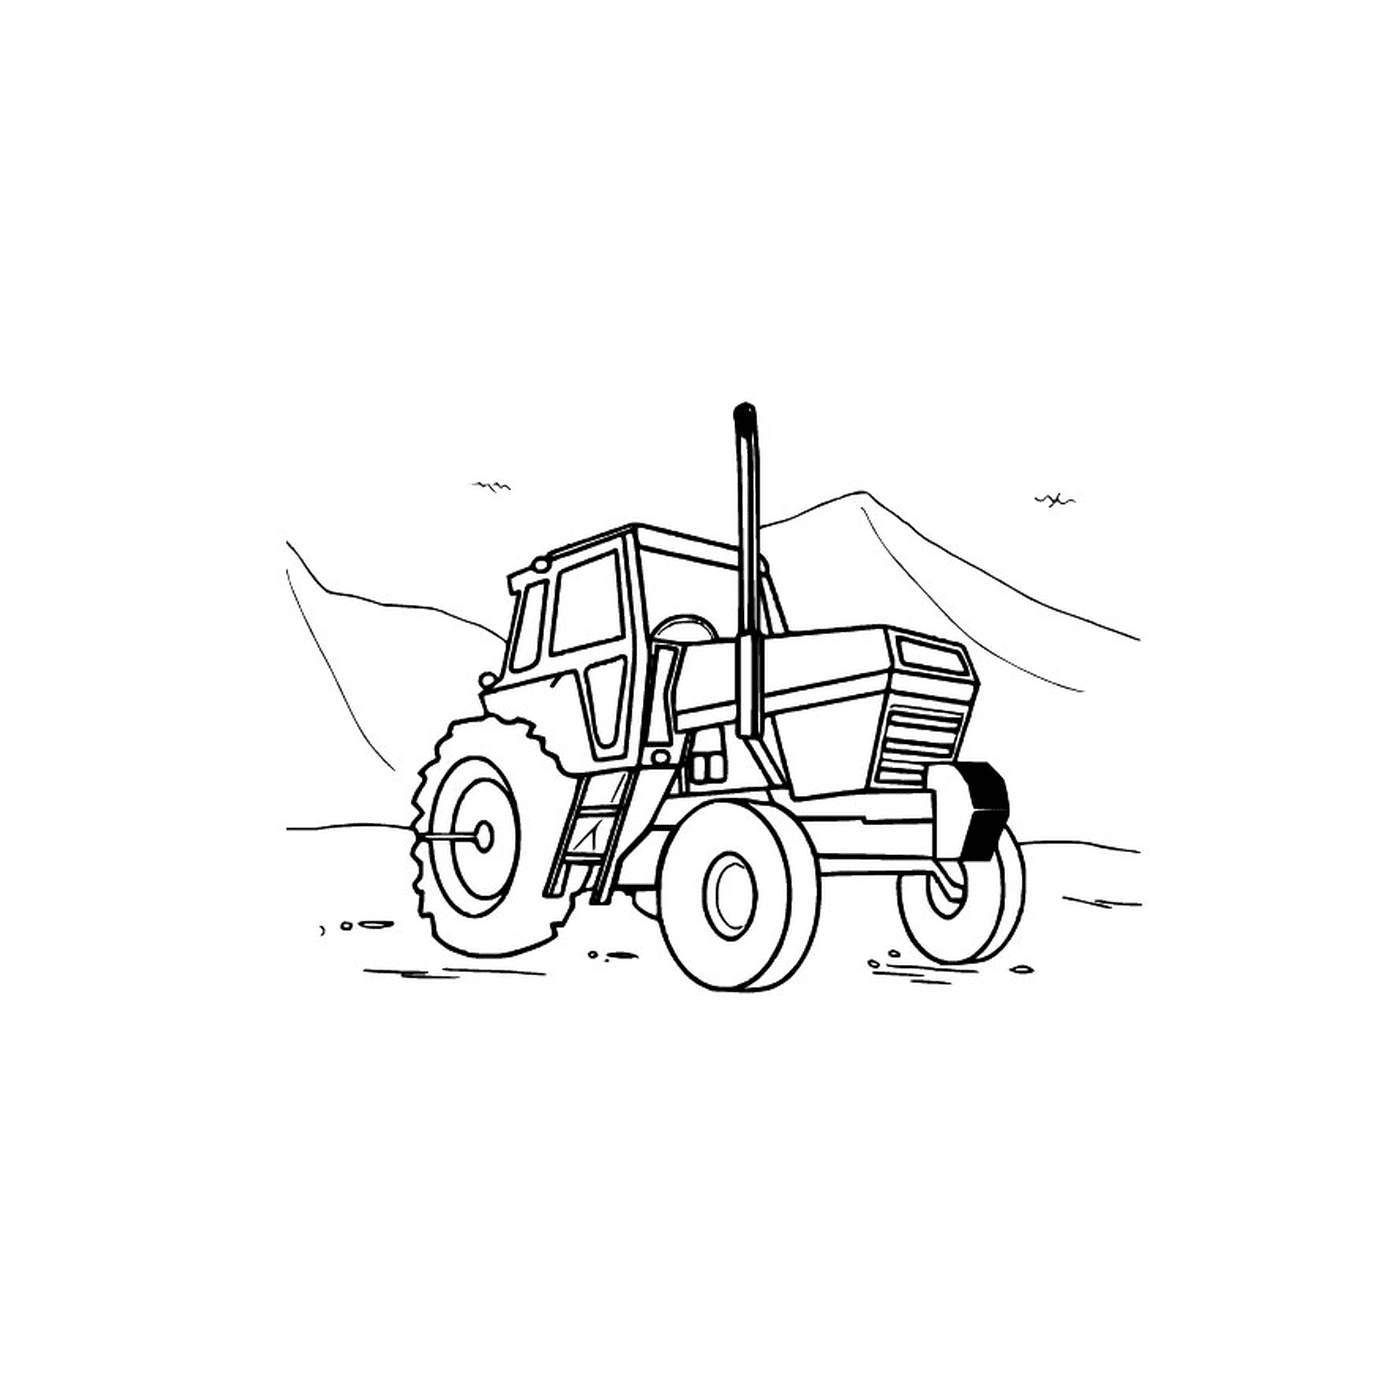   Un tracteur 